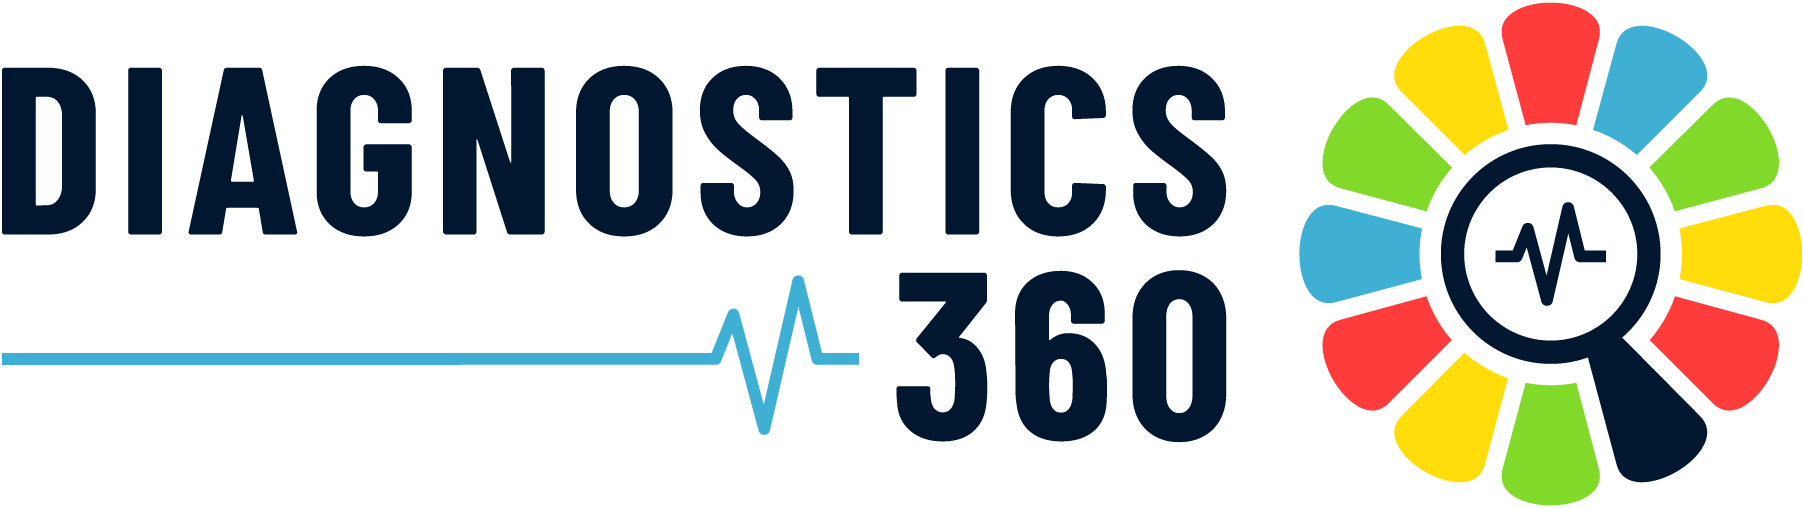 Diagnostics 360 Logo